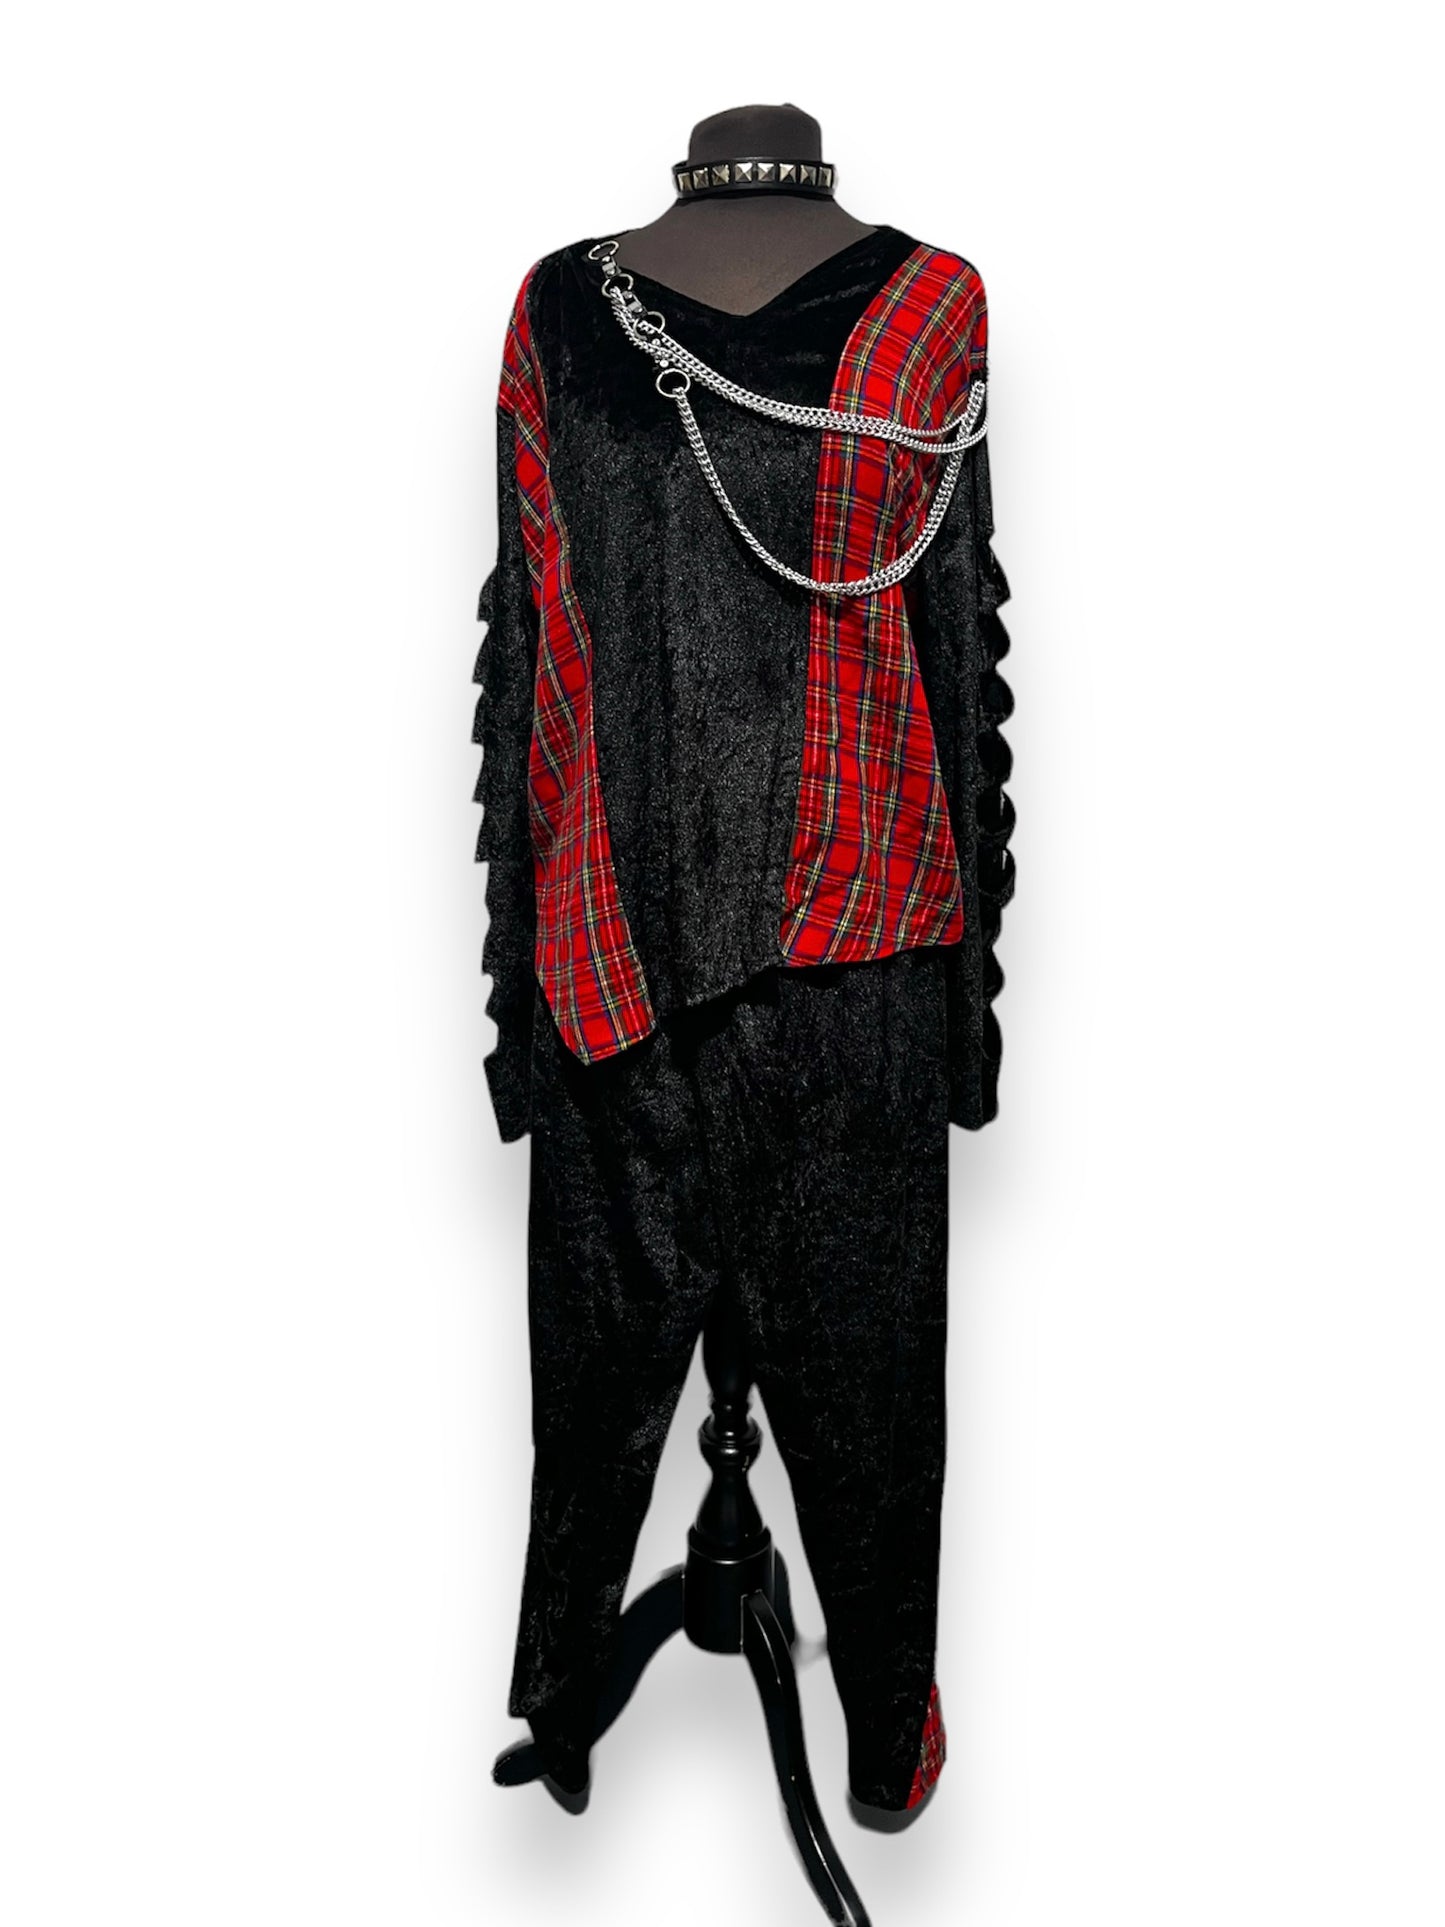 Unisex 80s style Punk tartan outfit Size Medium - Ex Hire